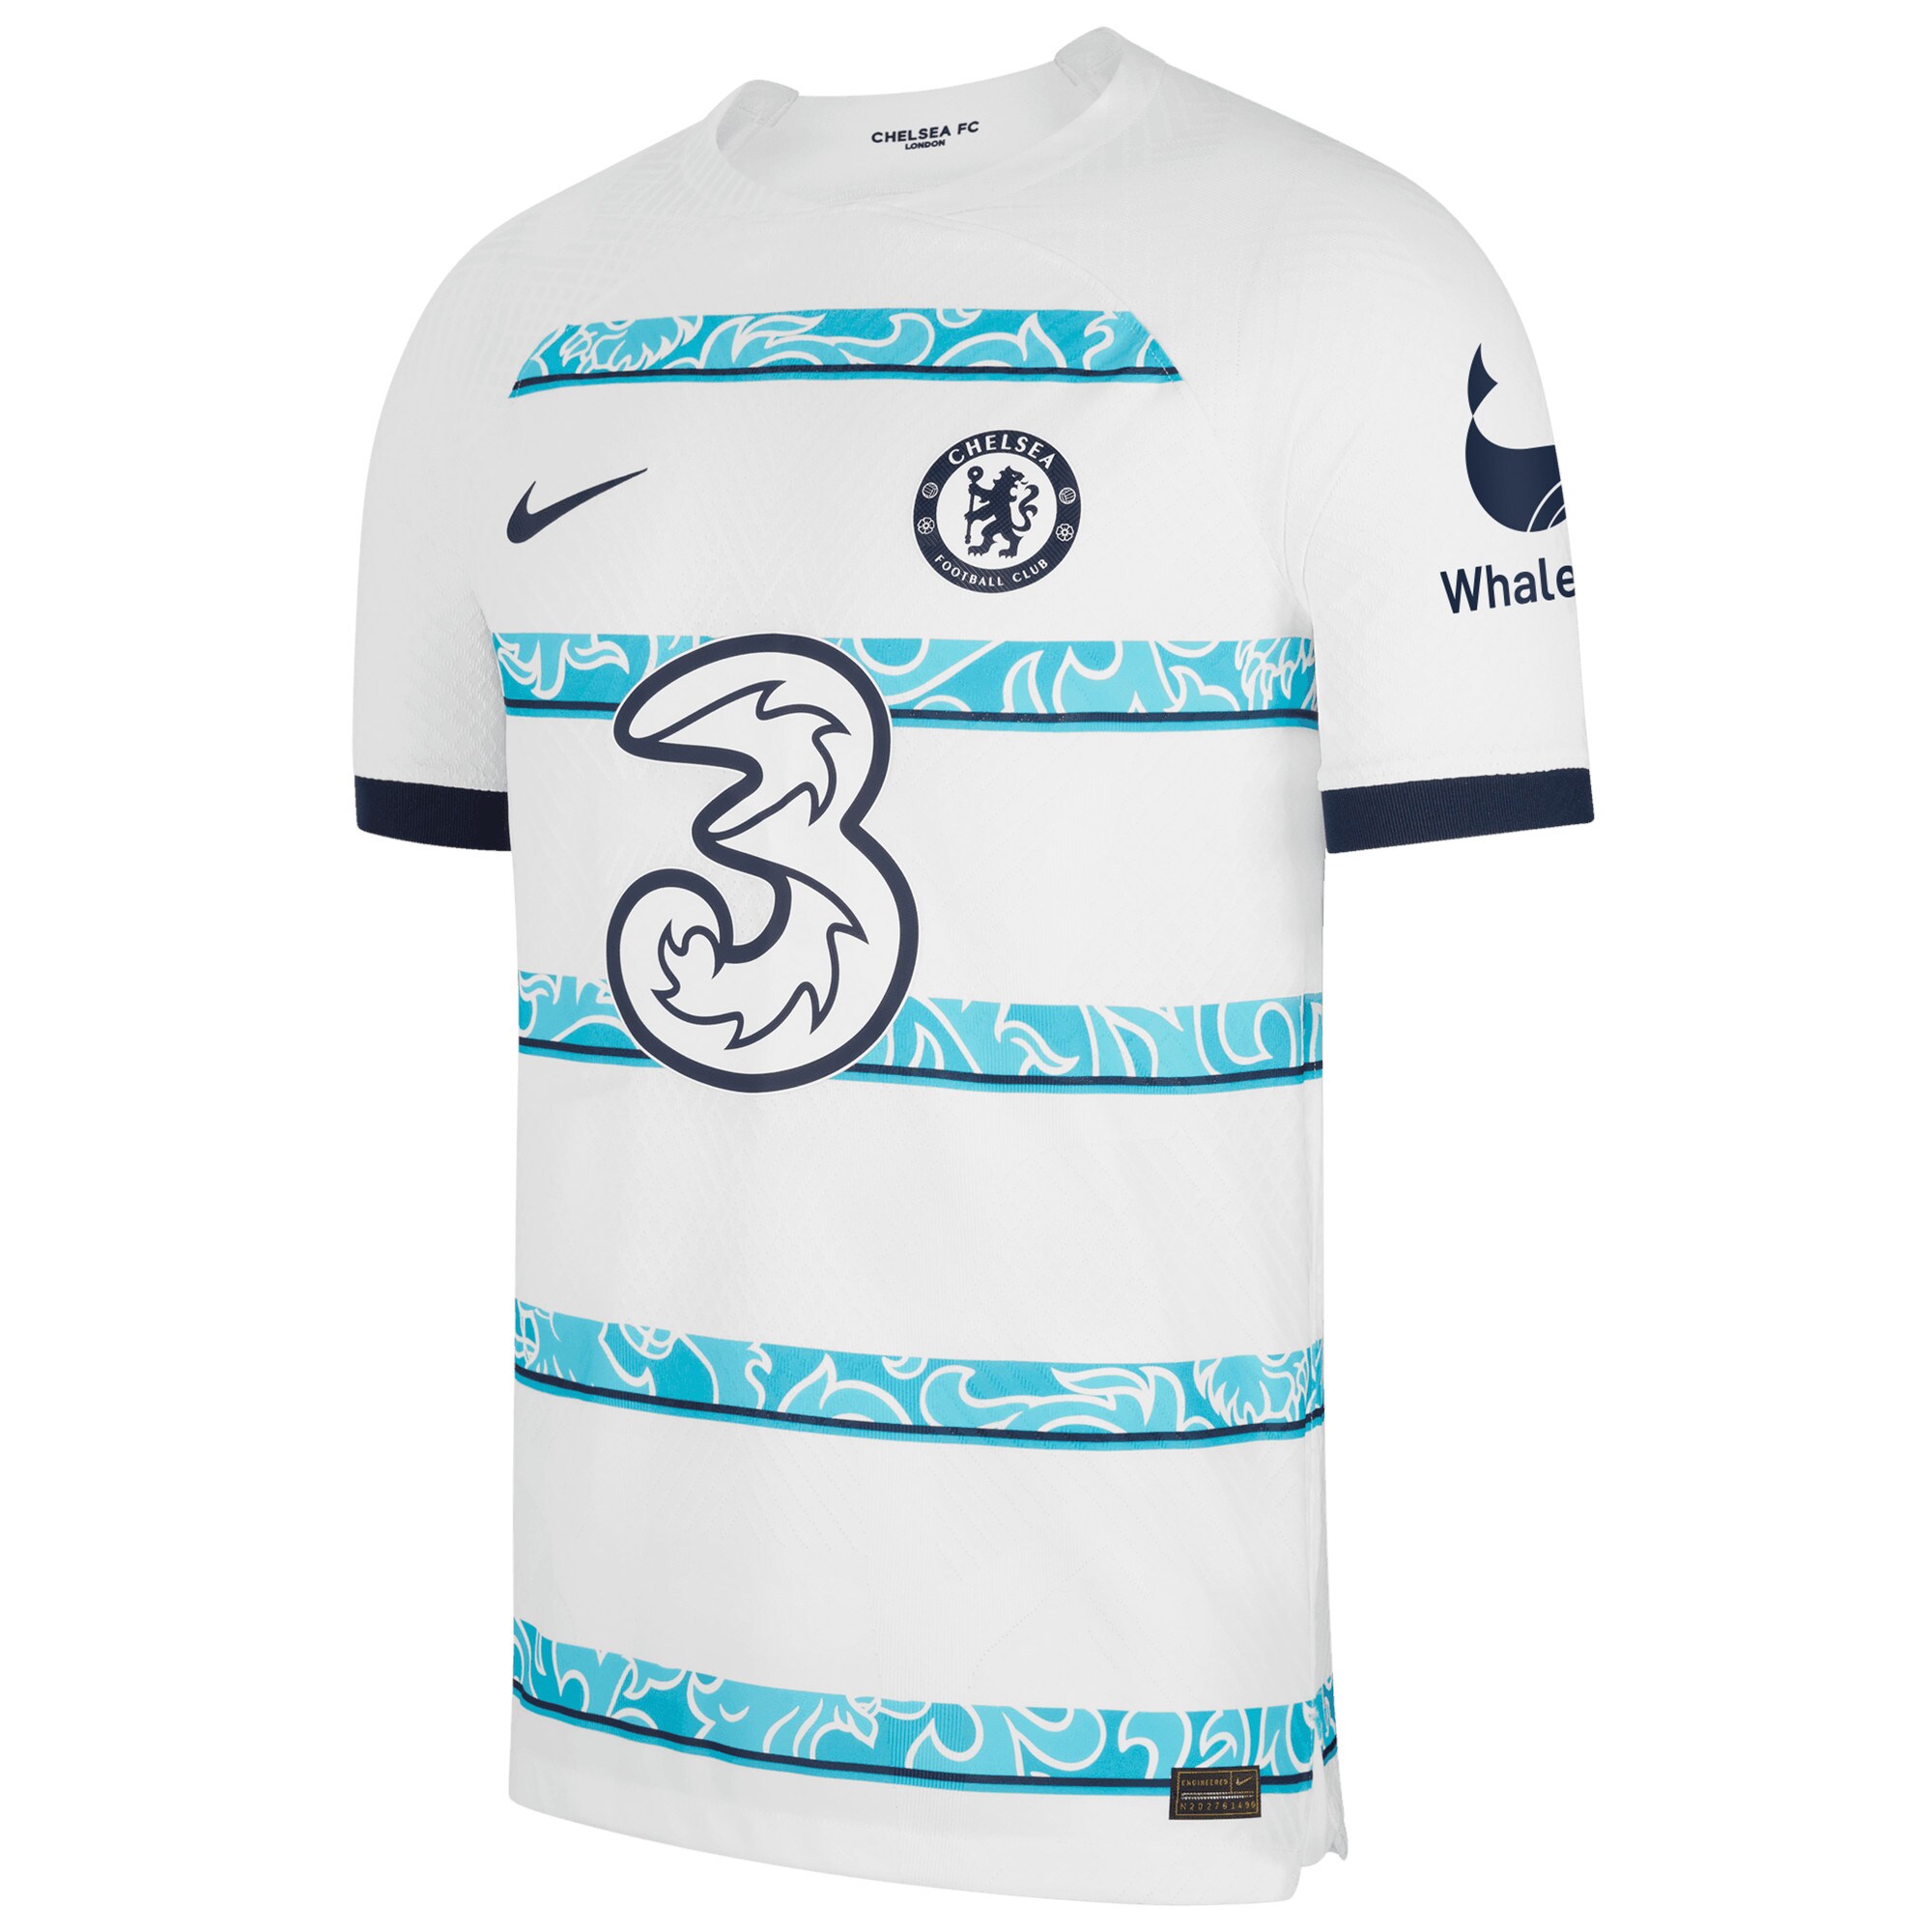 Chelsea Cup Away Vapor Match Shirt 2022-23 with James 10 printing